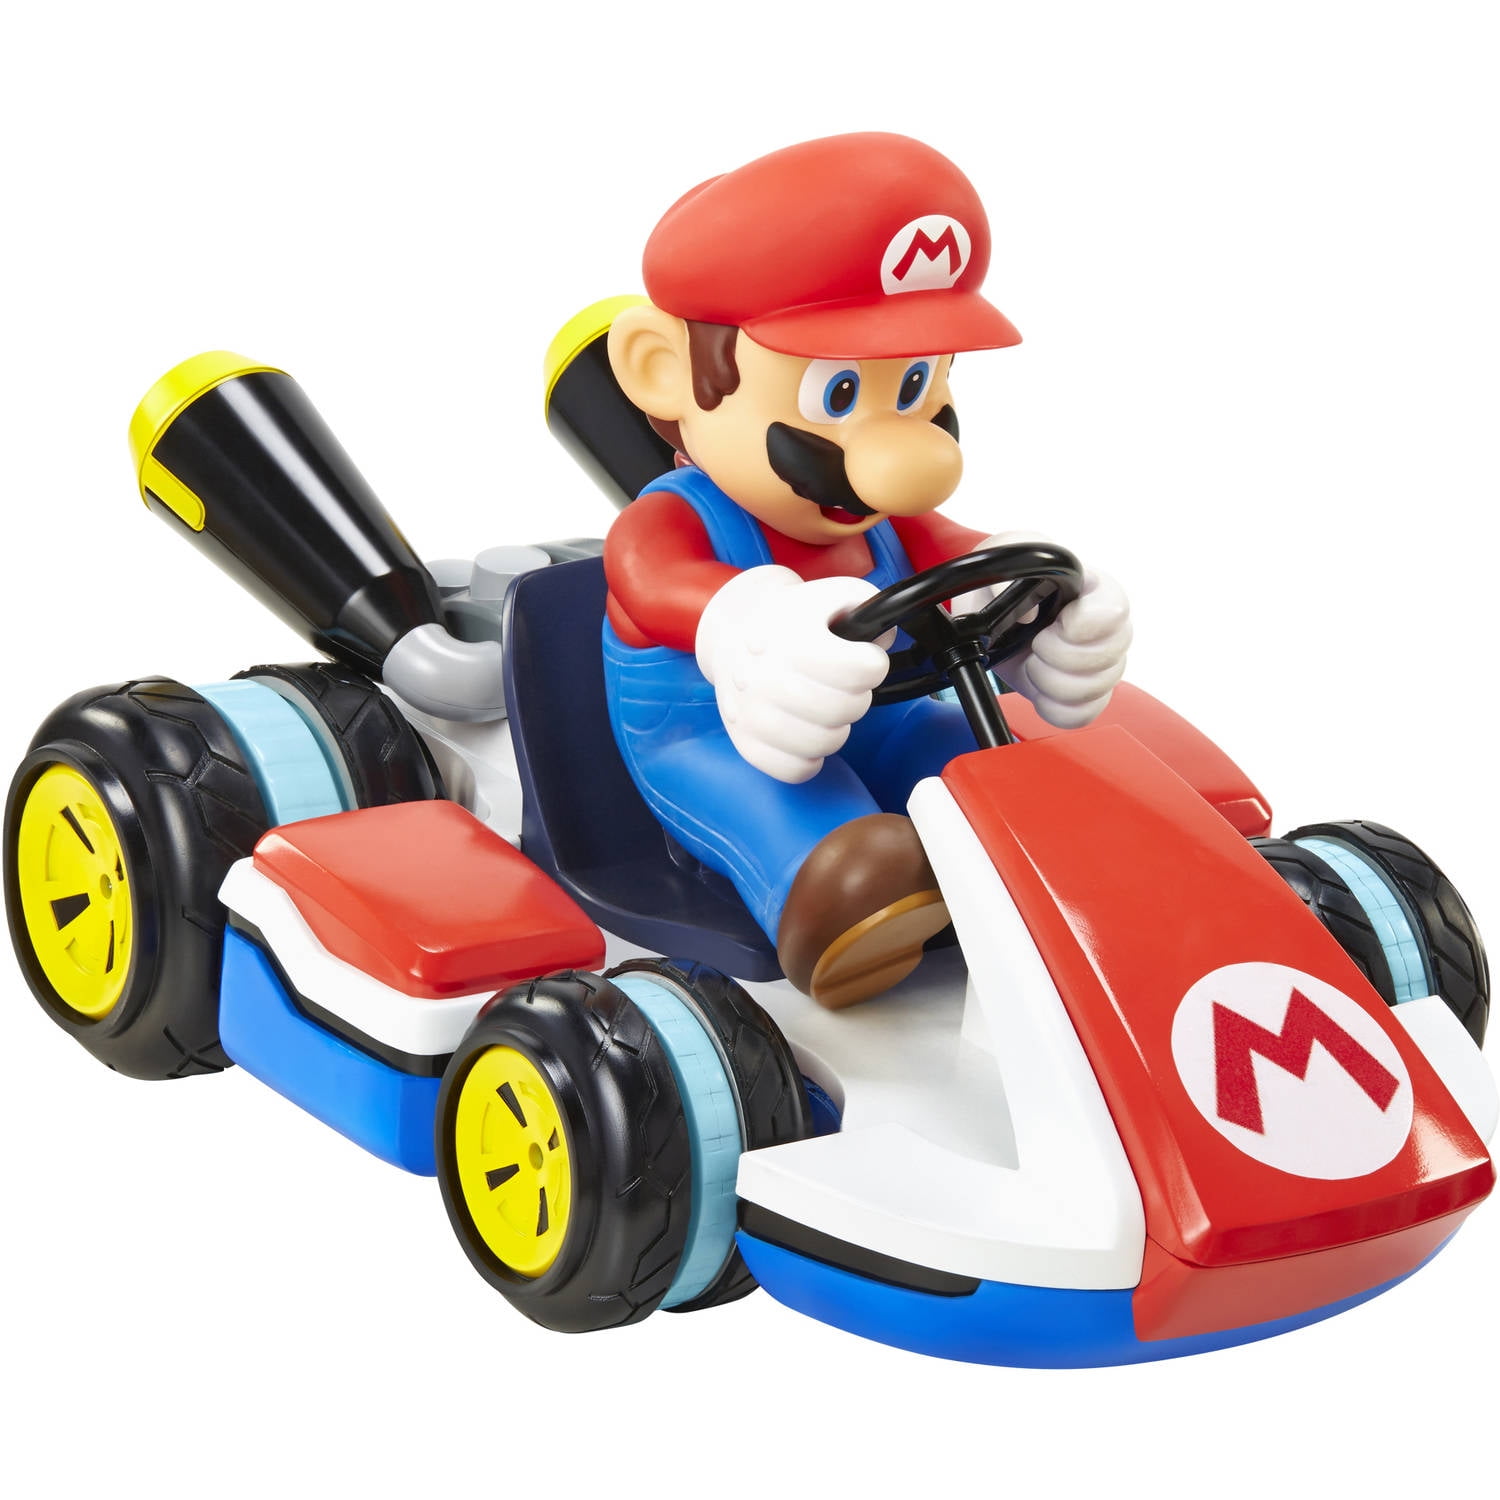 Lot figurines Super mario nintendo mario Kart - Nintendo